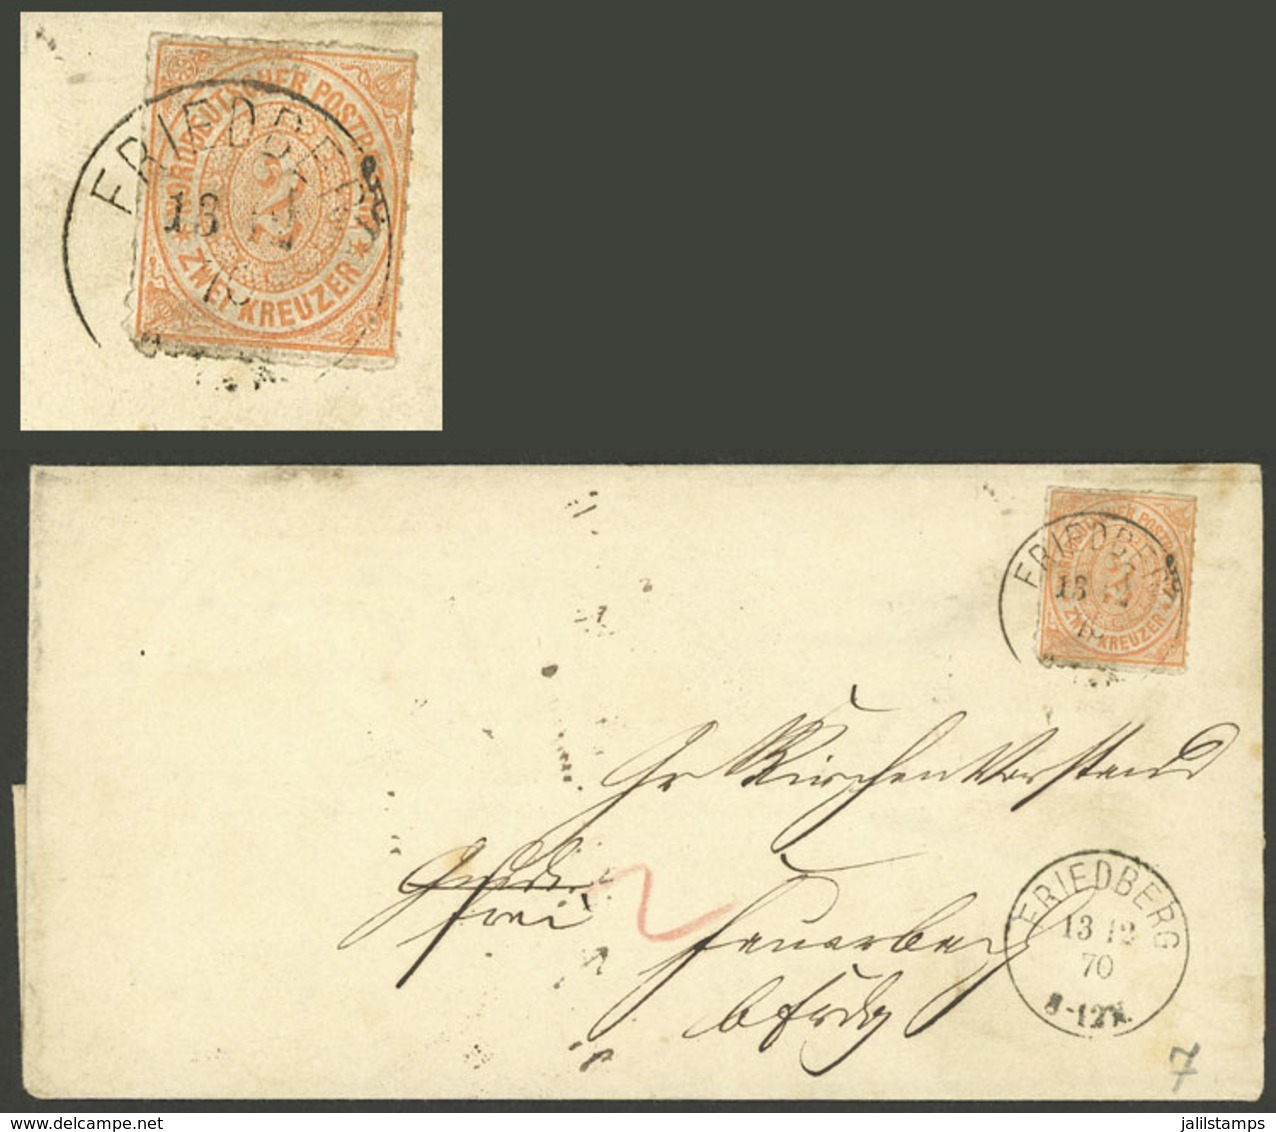 GERMANY: NORTH GERMAN CONFEDERATION: 13/DE/1870 Friedberg - ?, Folded Cover Franked By Sc.8 Alone, Very Nice! - Precursores